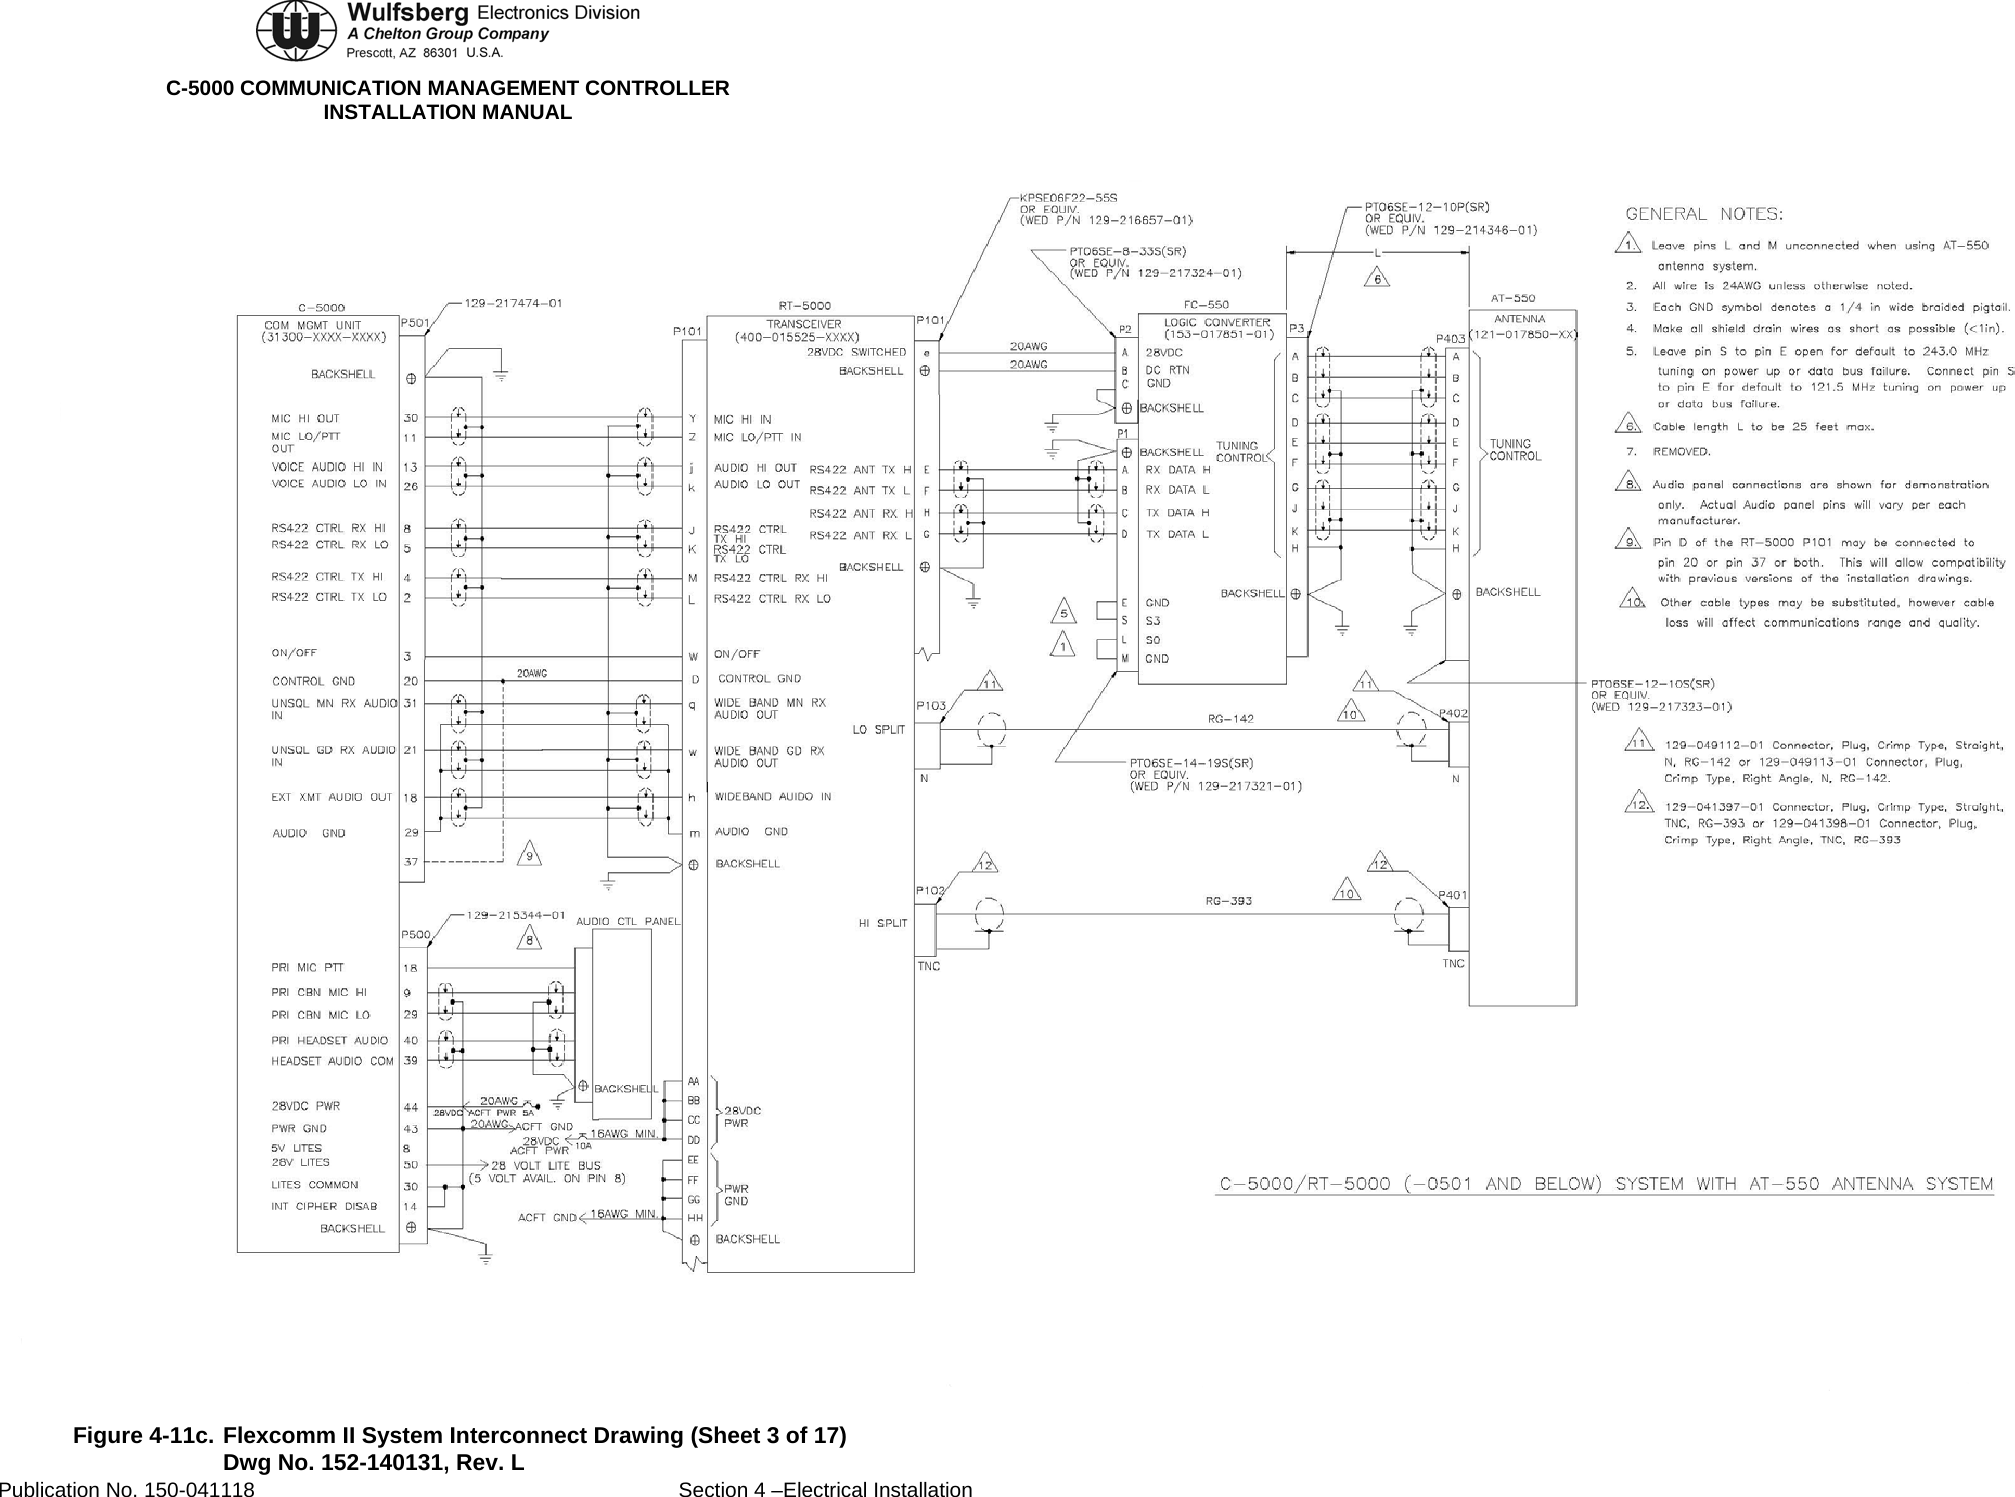  C-5000 COMMUNICATION MANAGEMENT CONTROLLER INSTALLATION MANUAL Section 4 –Electrical Installation  Figure 4-11c. Flexcomm II System Interconnect Drawing (Sheet 3 of 17) Publication No. 150-041118 Dwg No. 152-140131, Rev. L 